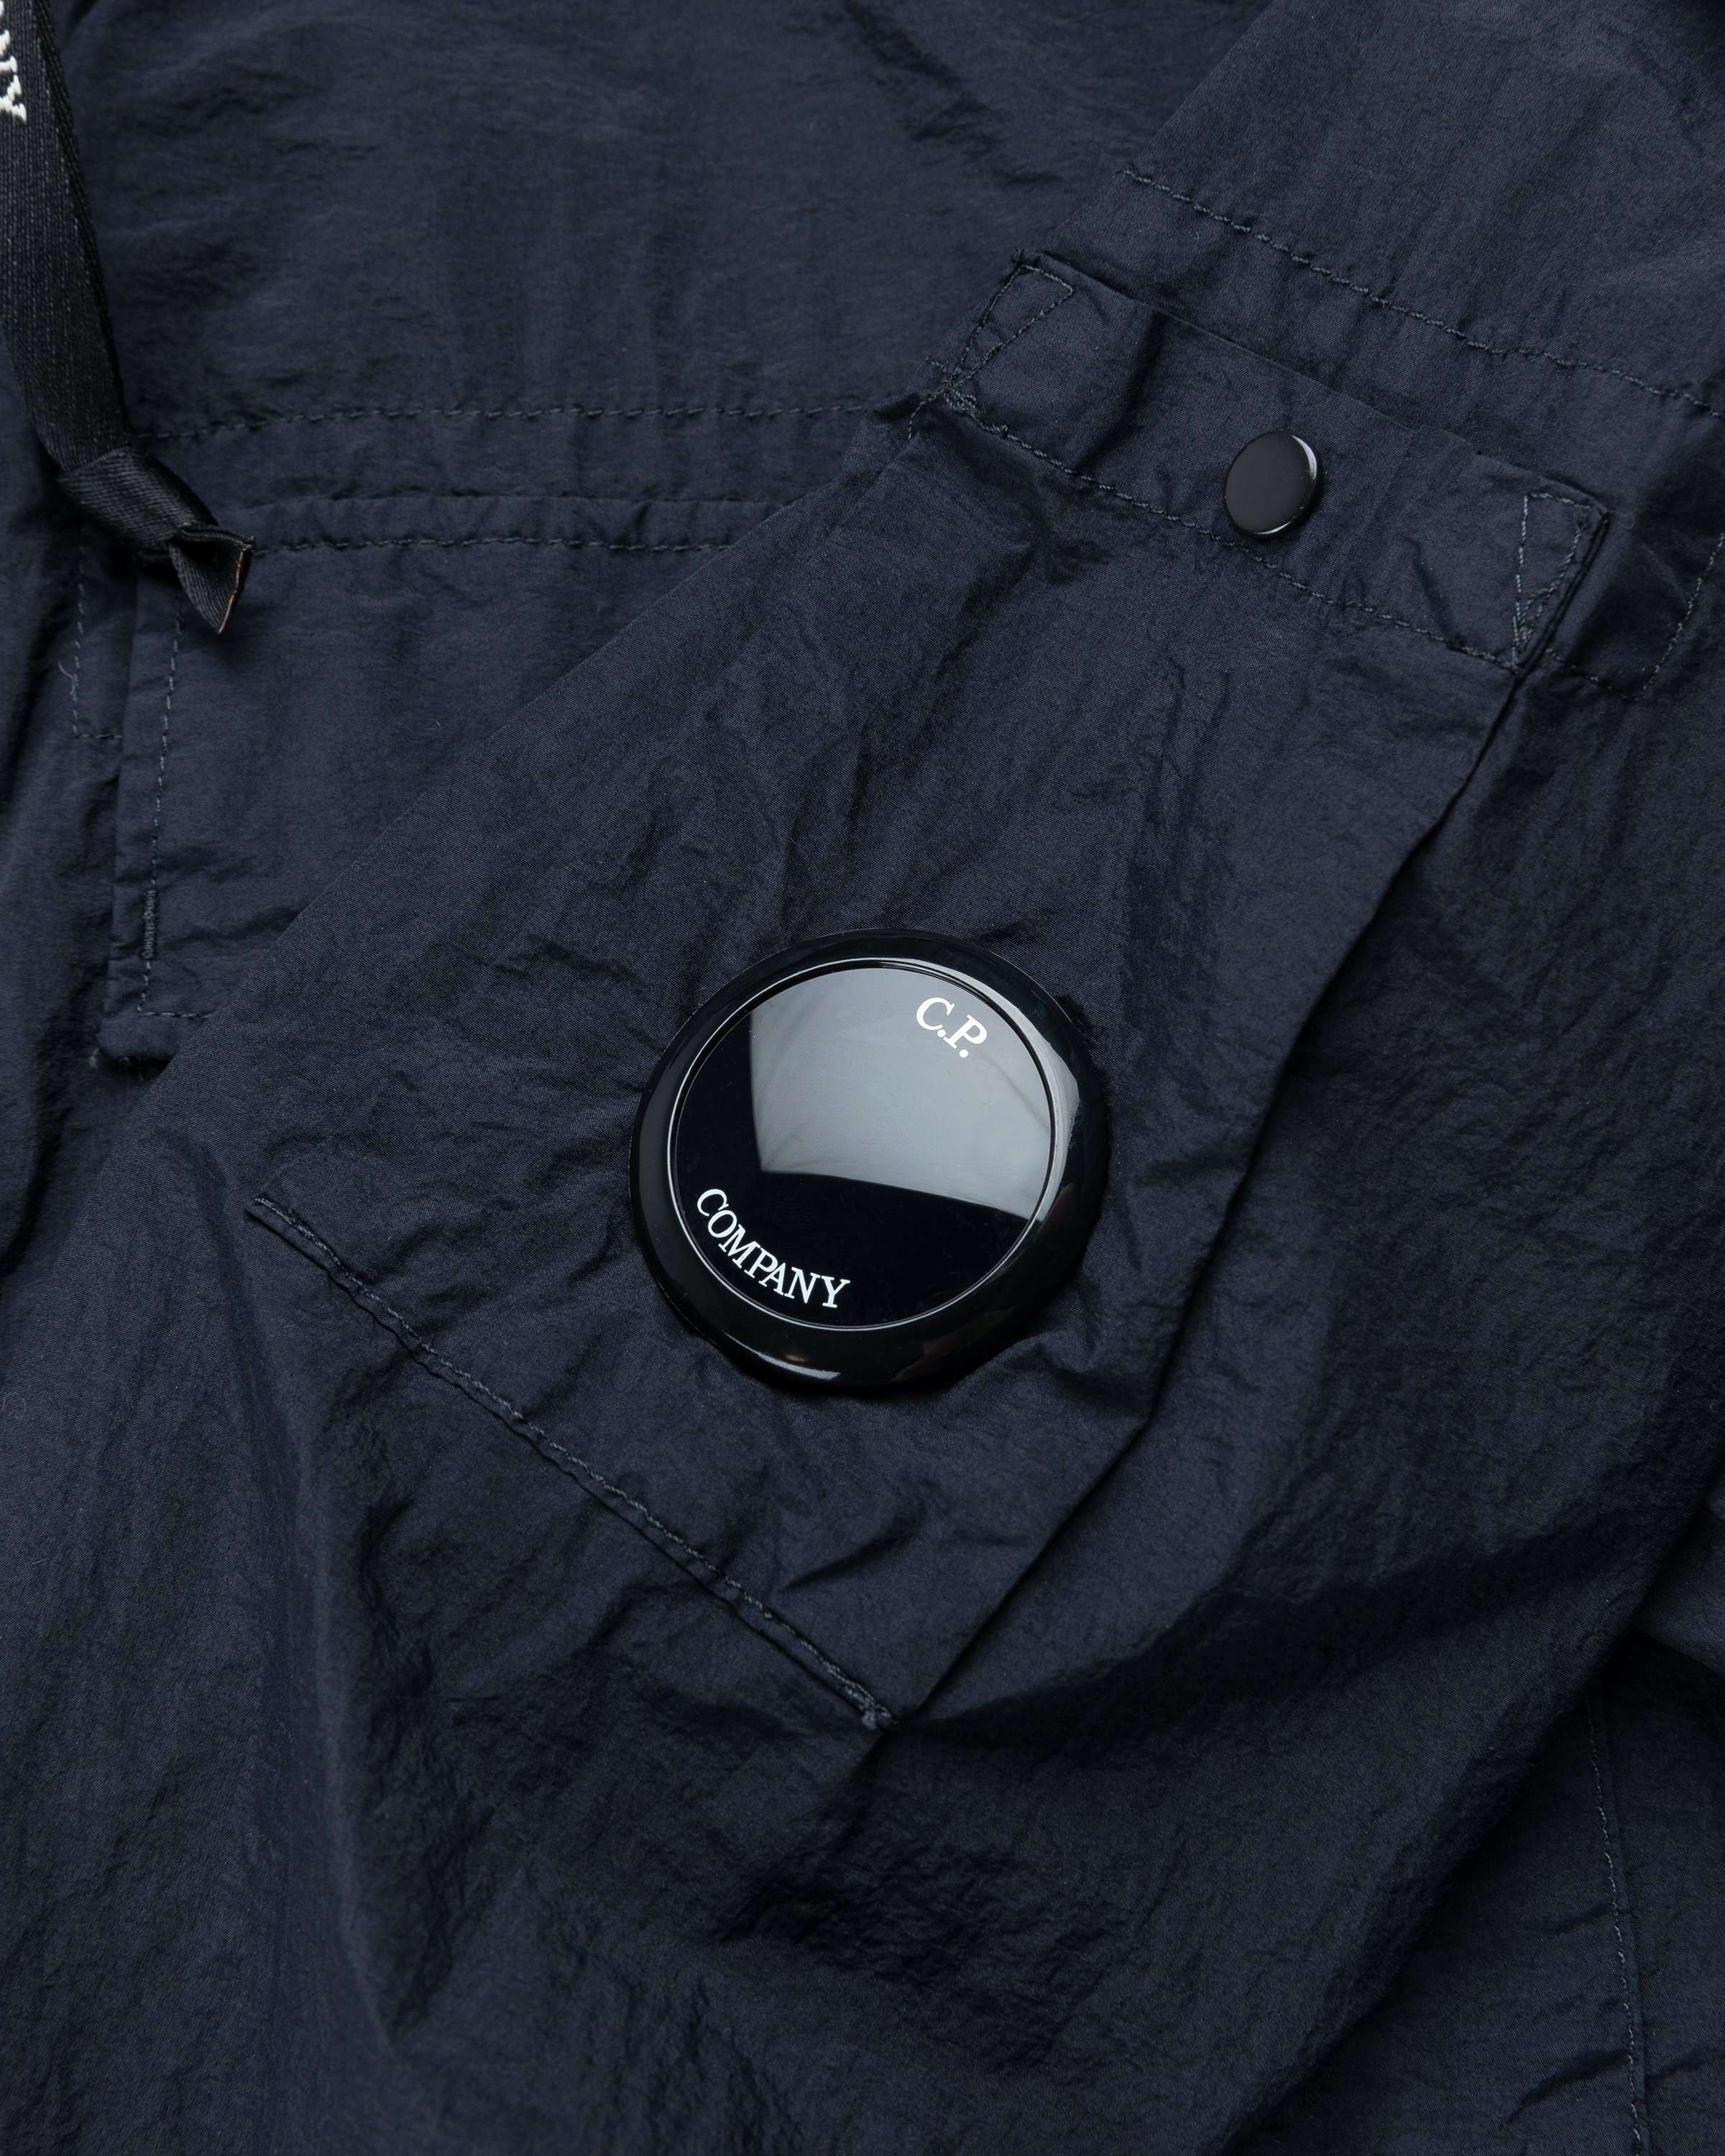 C.P. Company – Taylon L Zip Shirt Black - Overshirt - Black - Image 6